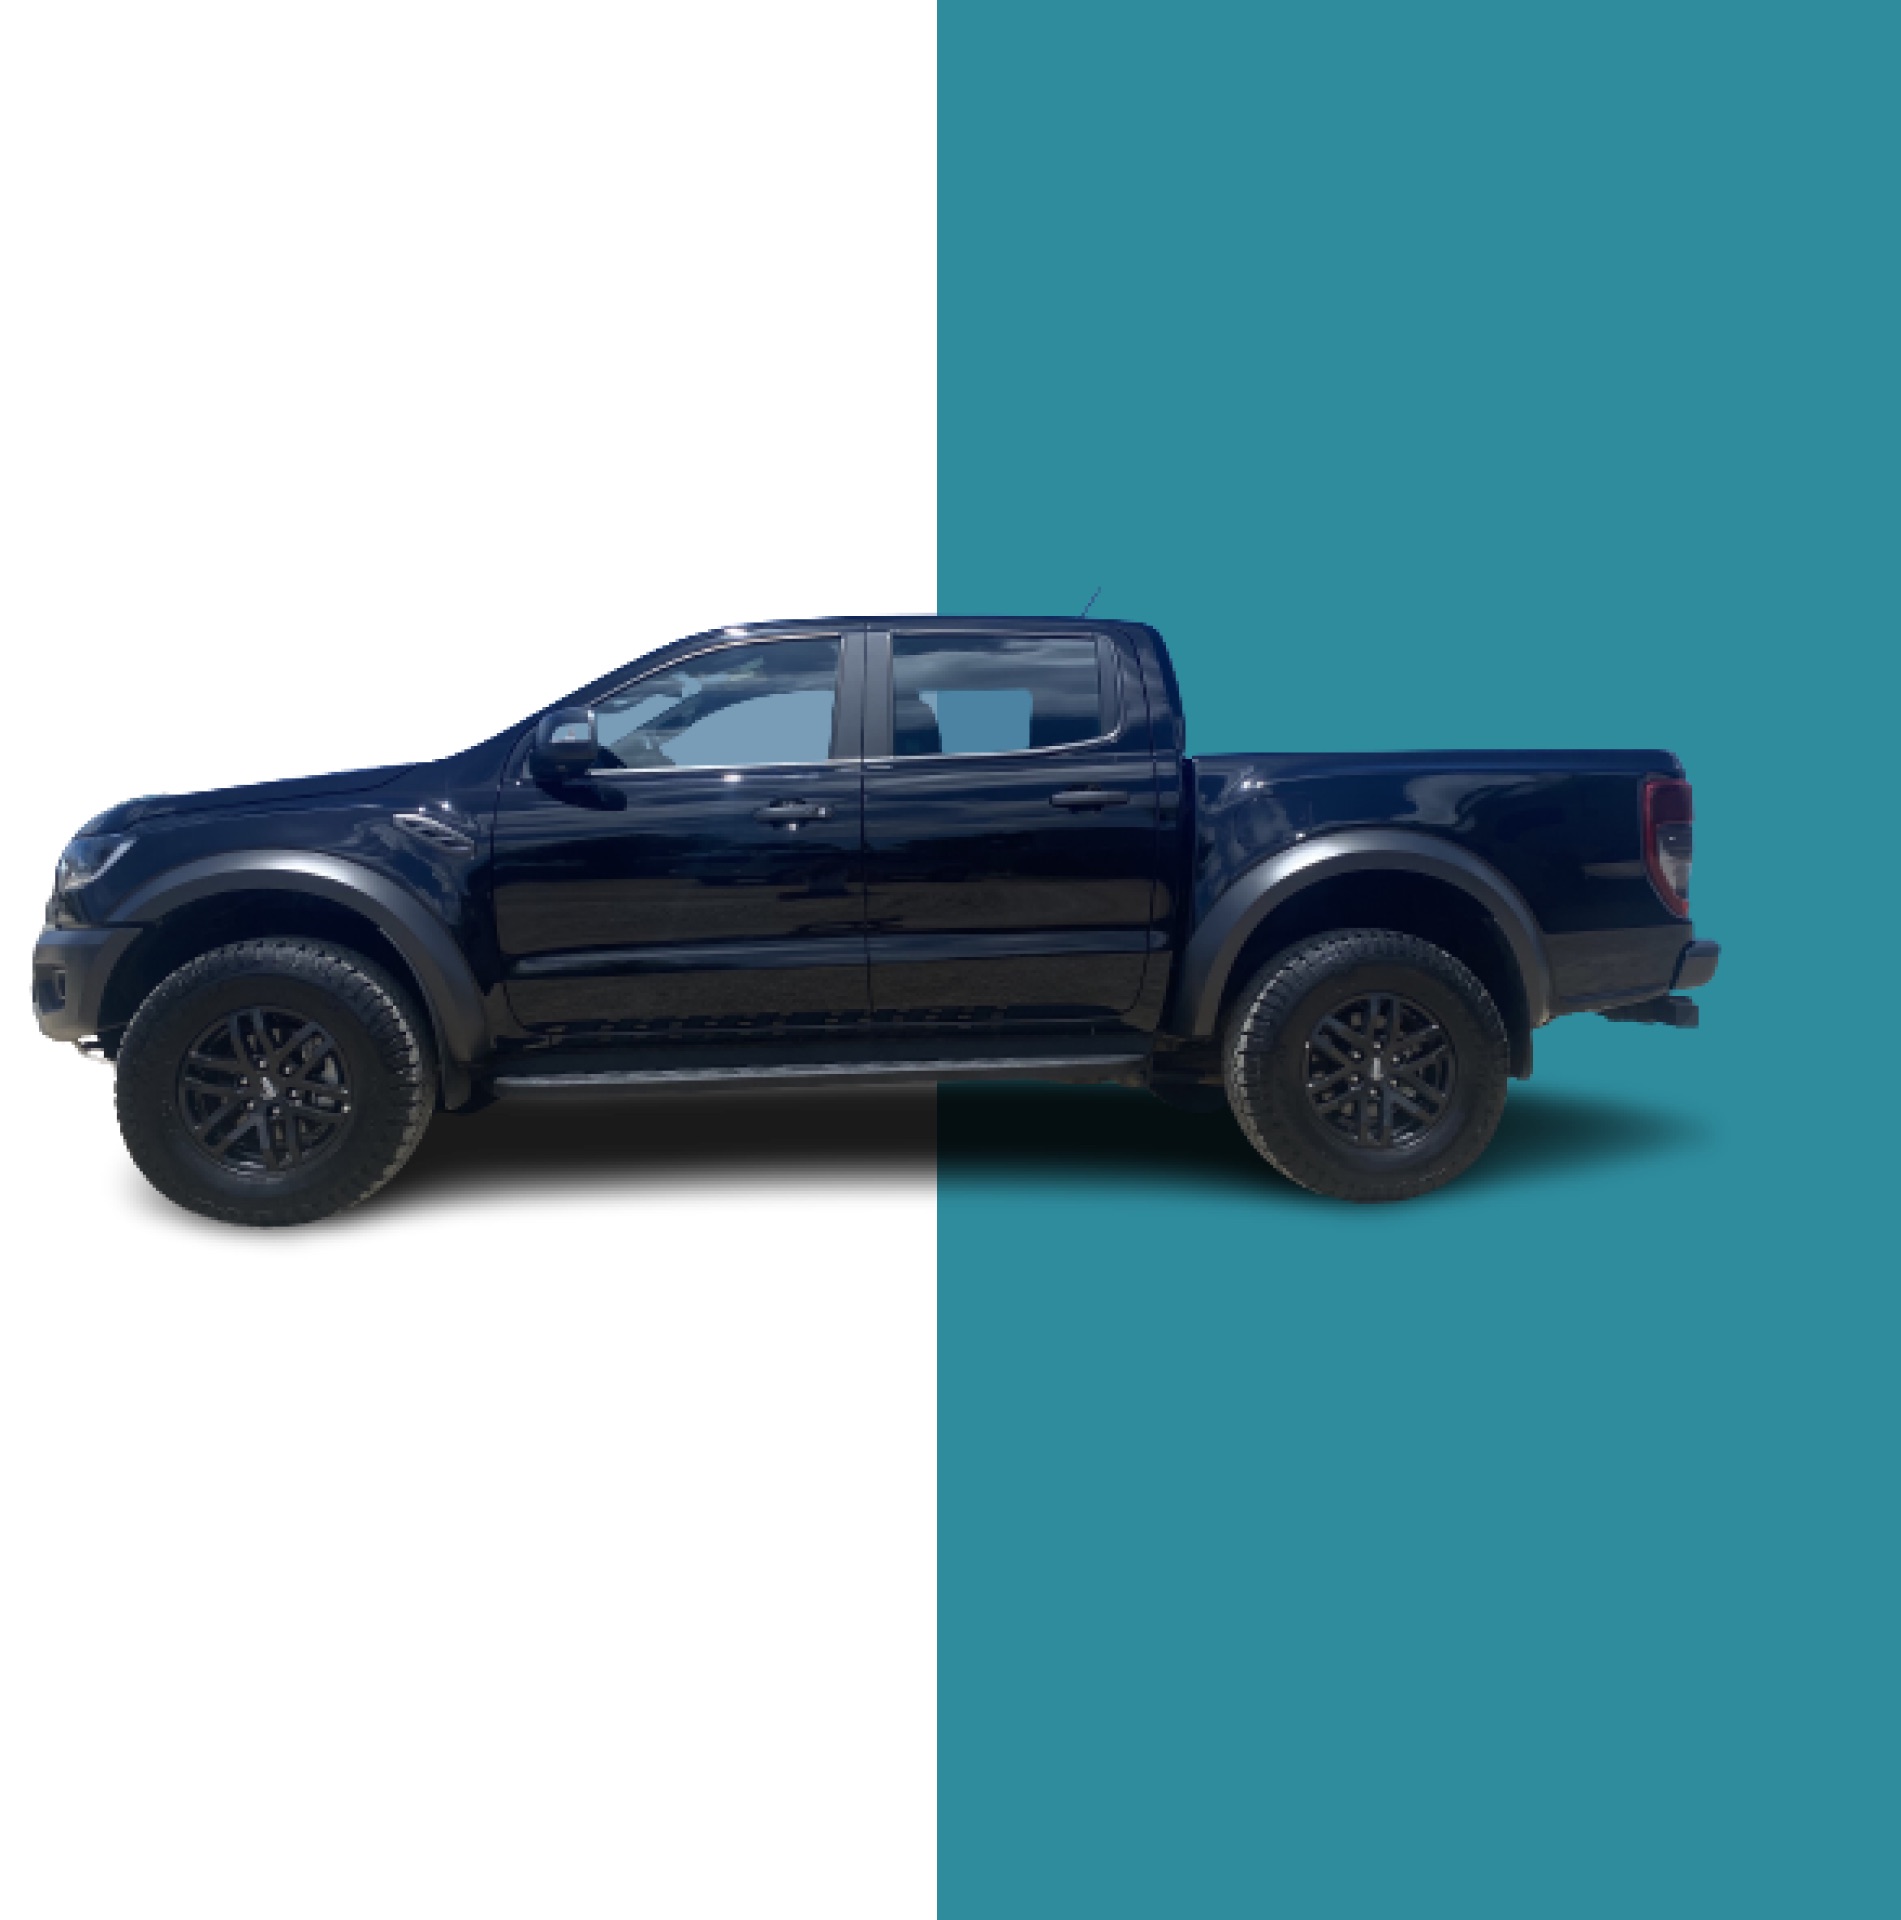 Schitterende Ford Raptor Pickup getoond tegen een dynamische achtergrond.